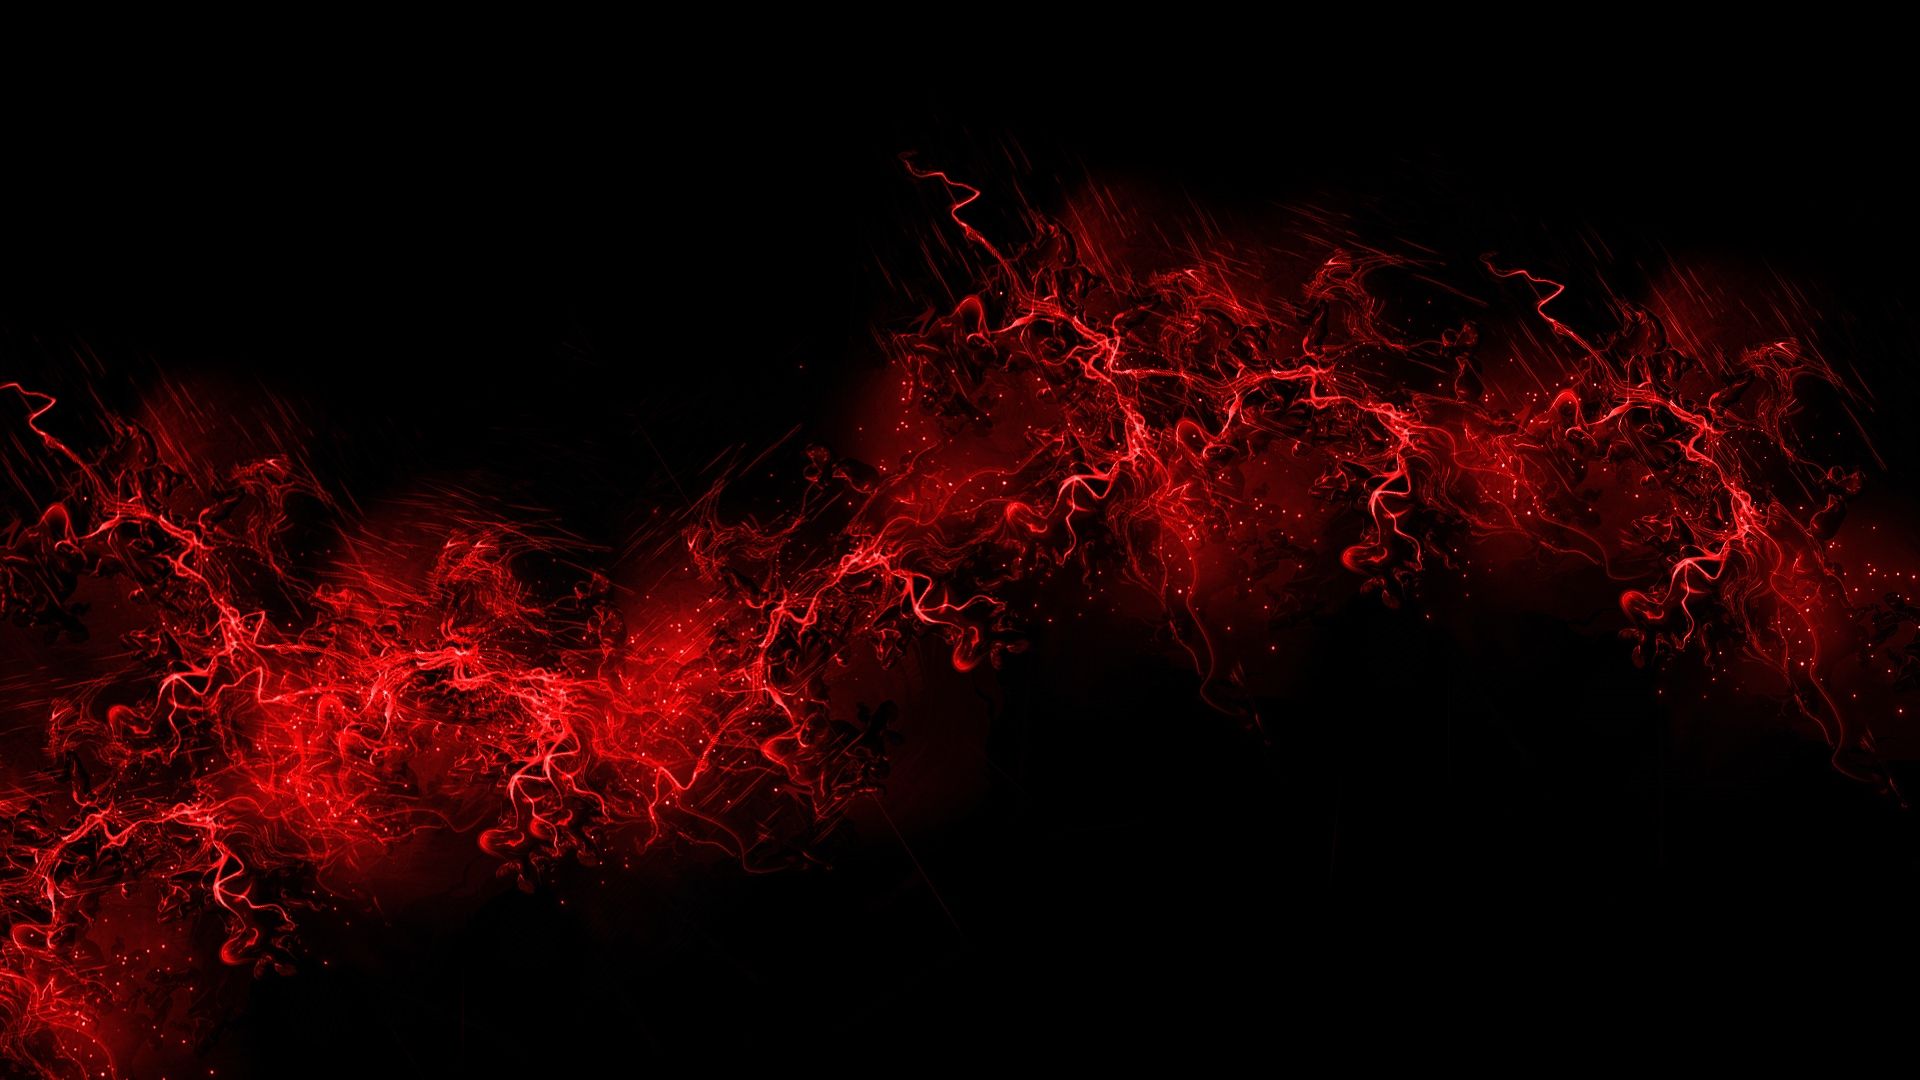 Free download black red desktop wallpaper cropped red face black